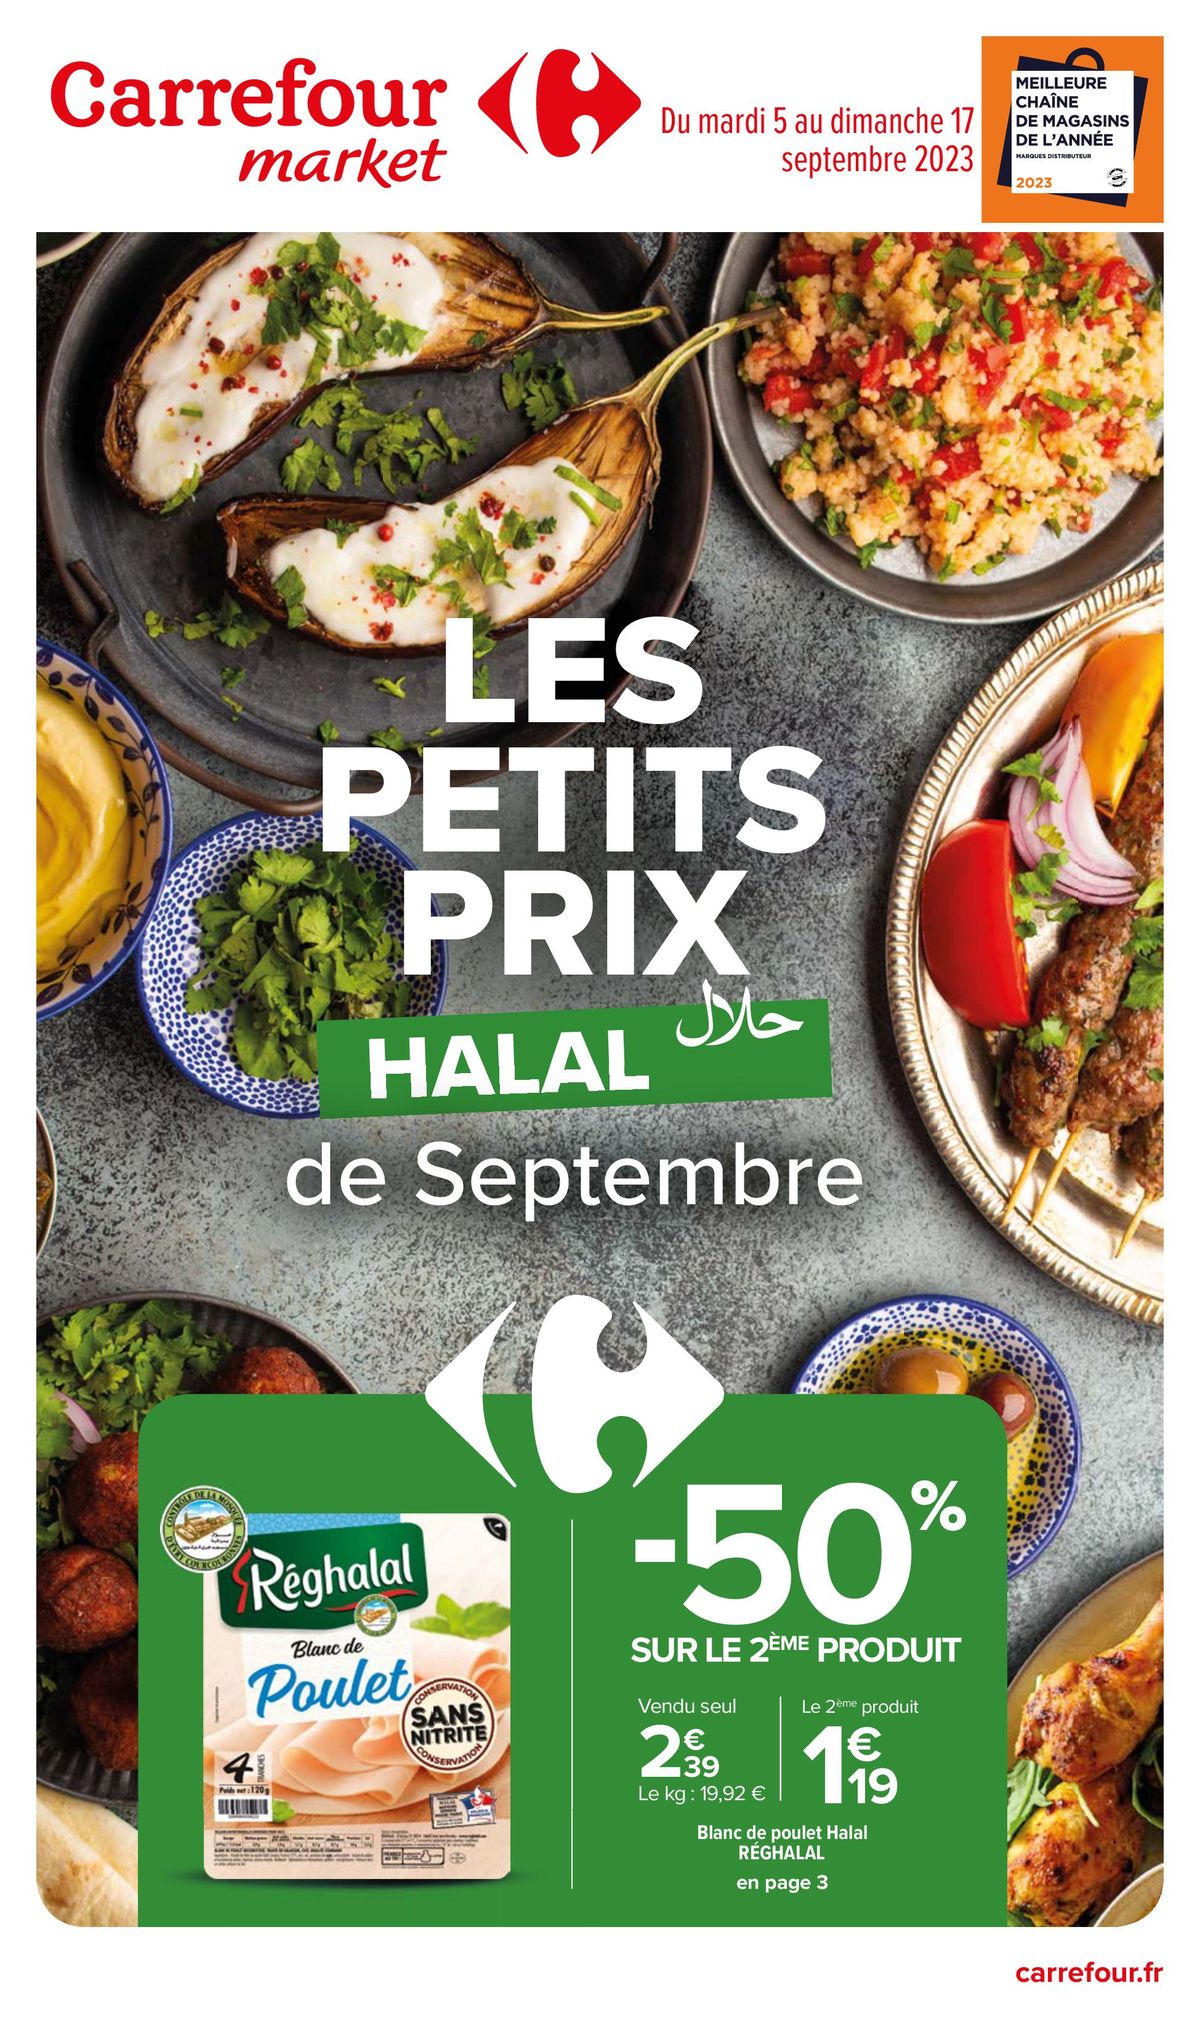 Catalogue Les petits prix Halal, page 00001